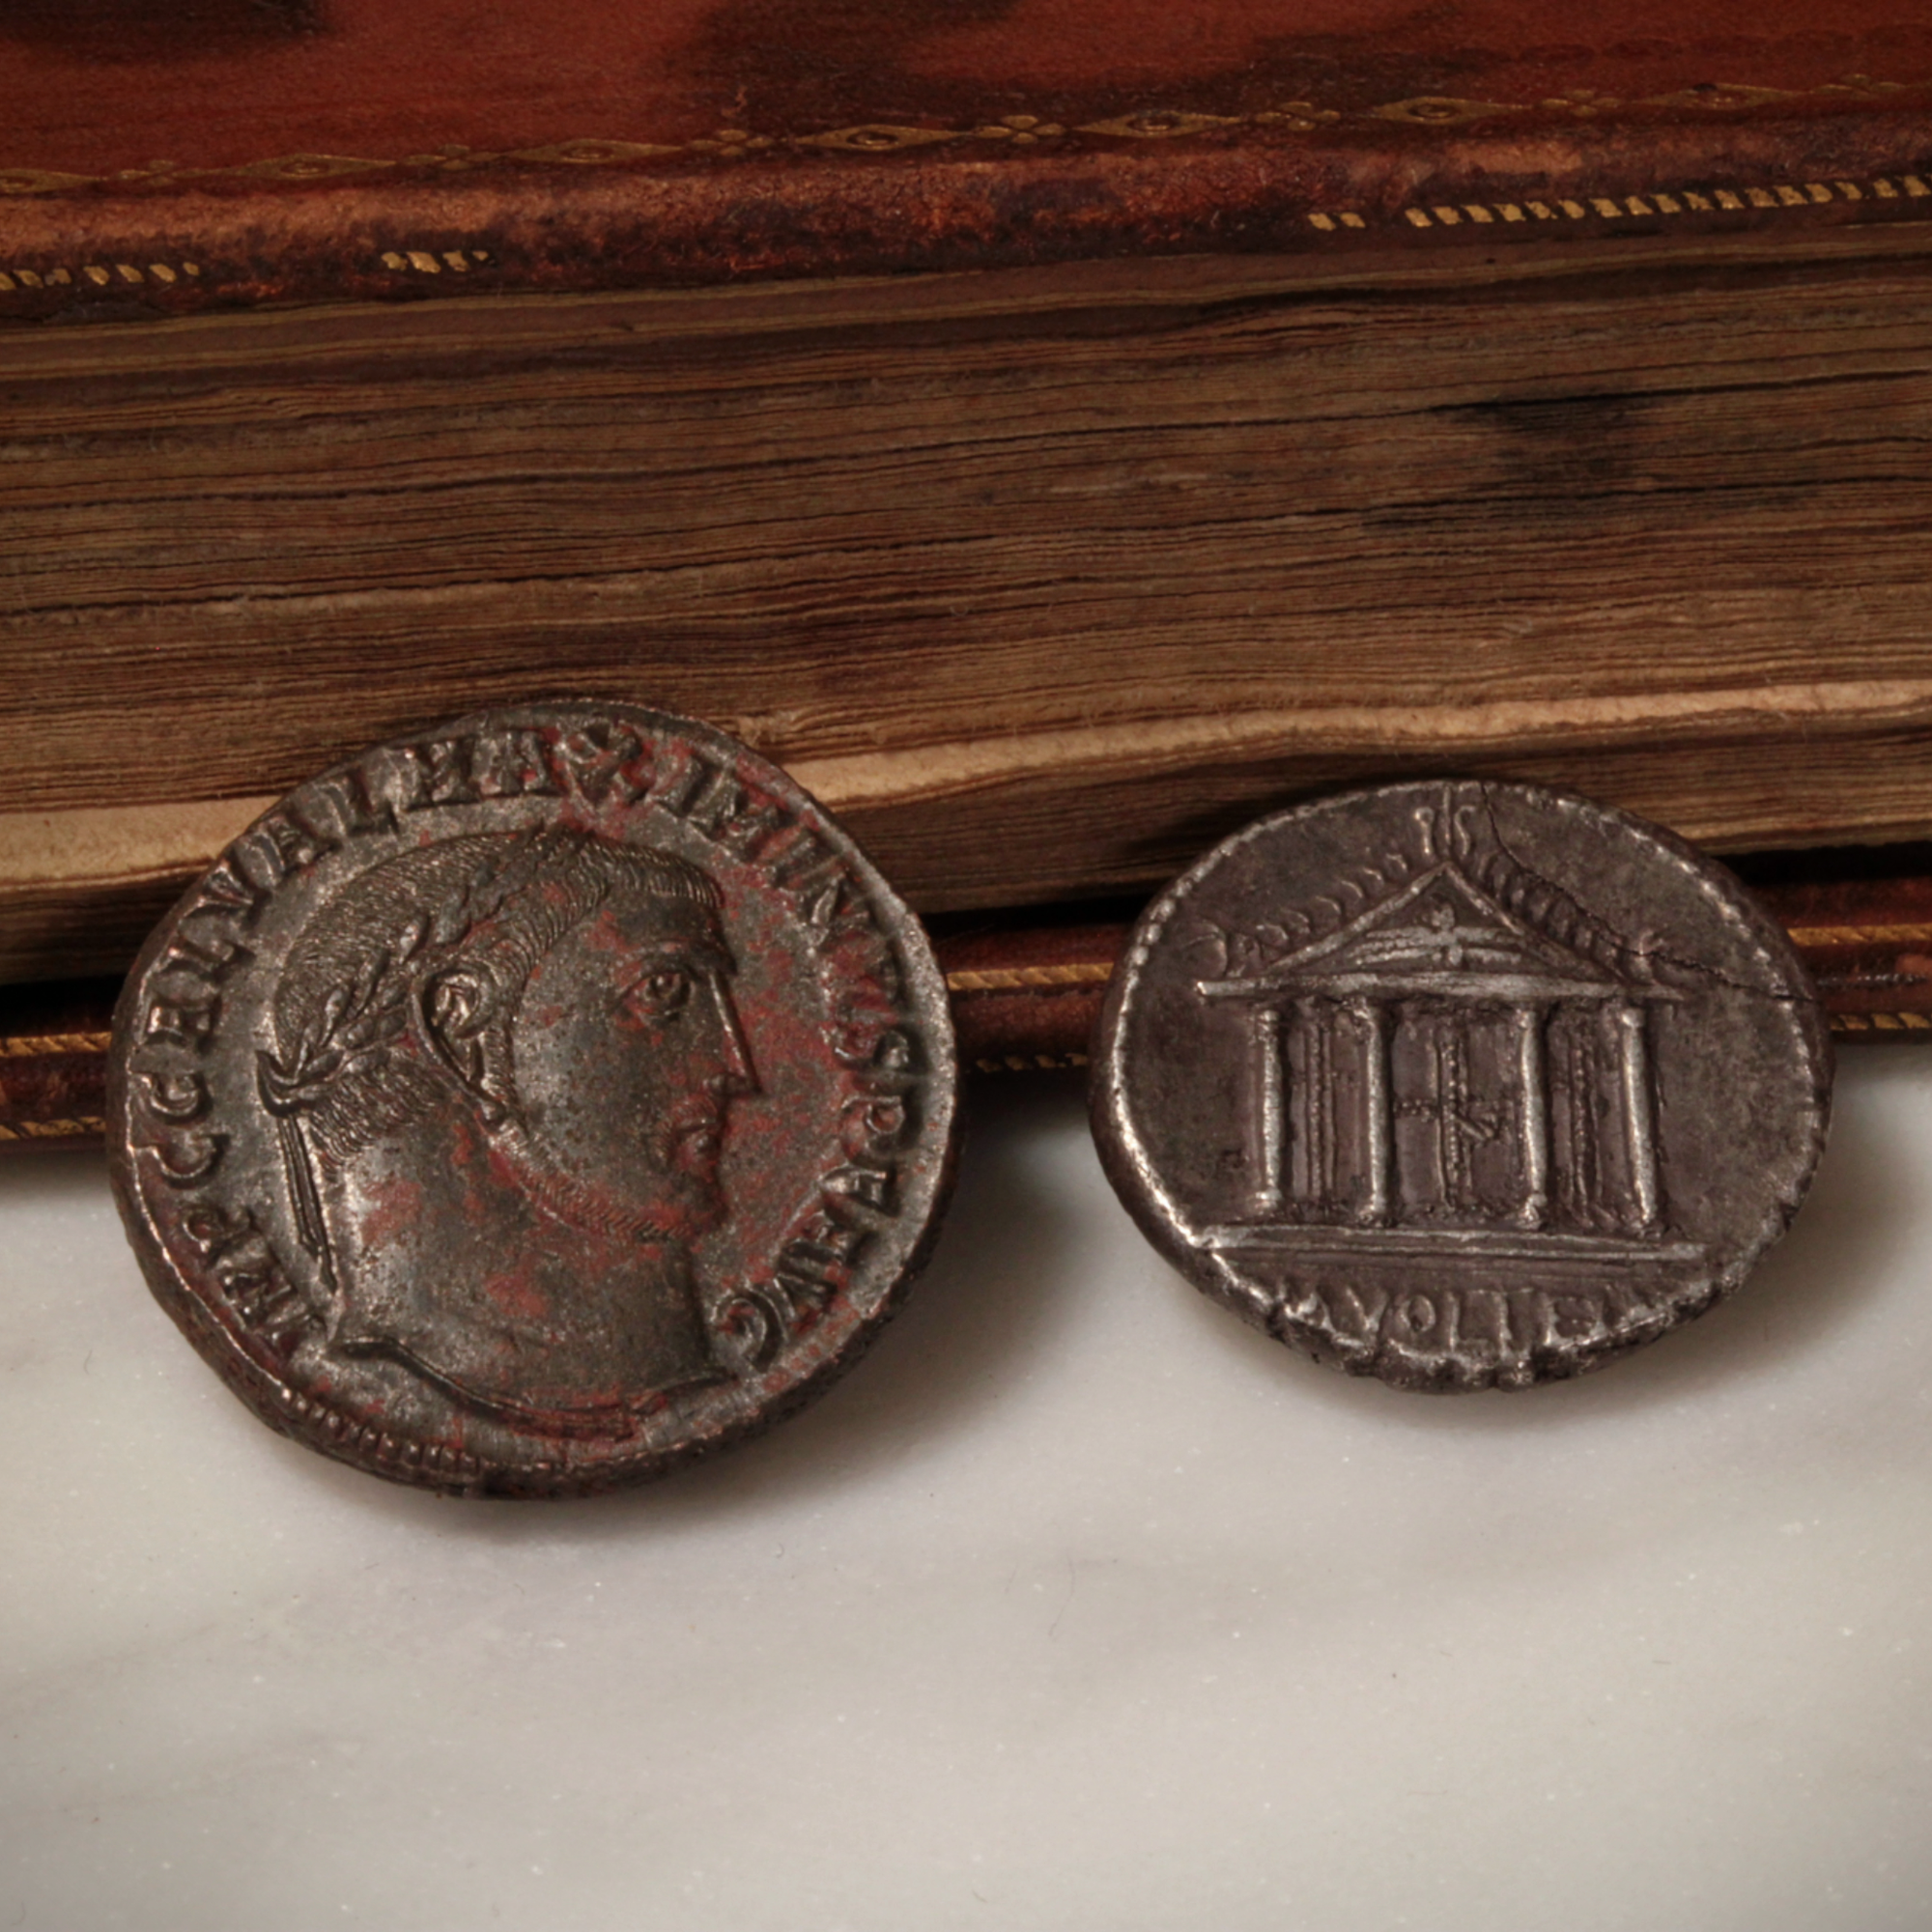 January 31st: Premium Roman Coins